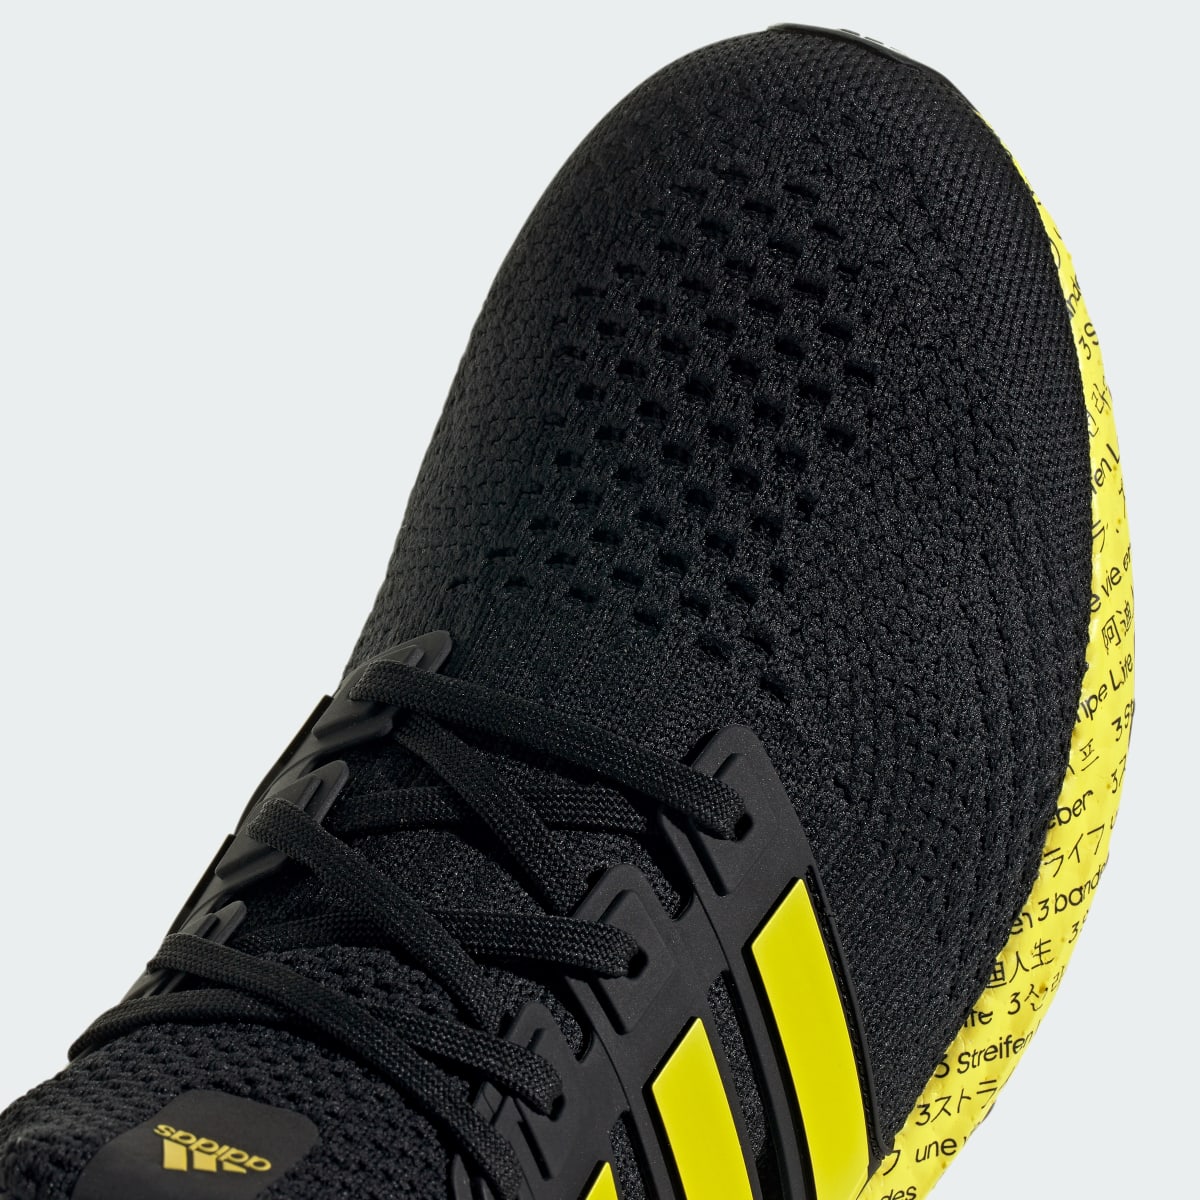 Adidas Ultraboost 5.0 DNA Running Sportswear Lifestyle Shoes. 8